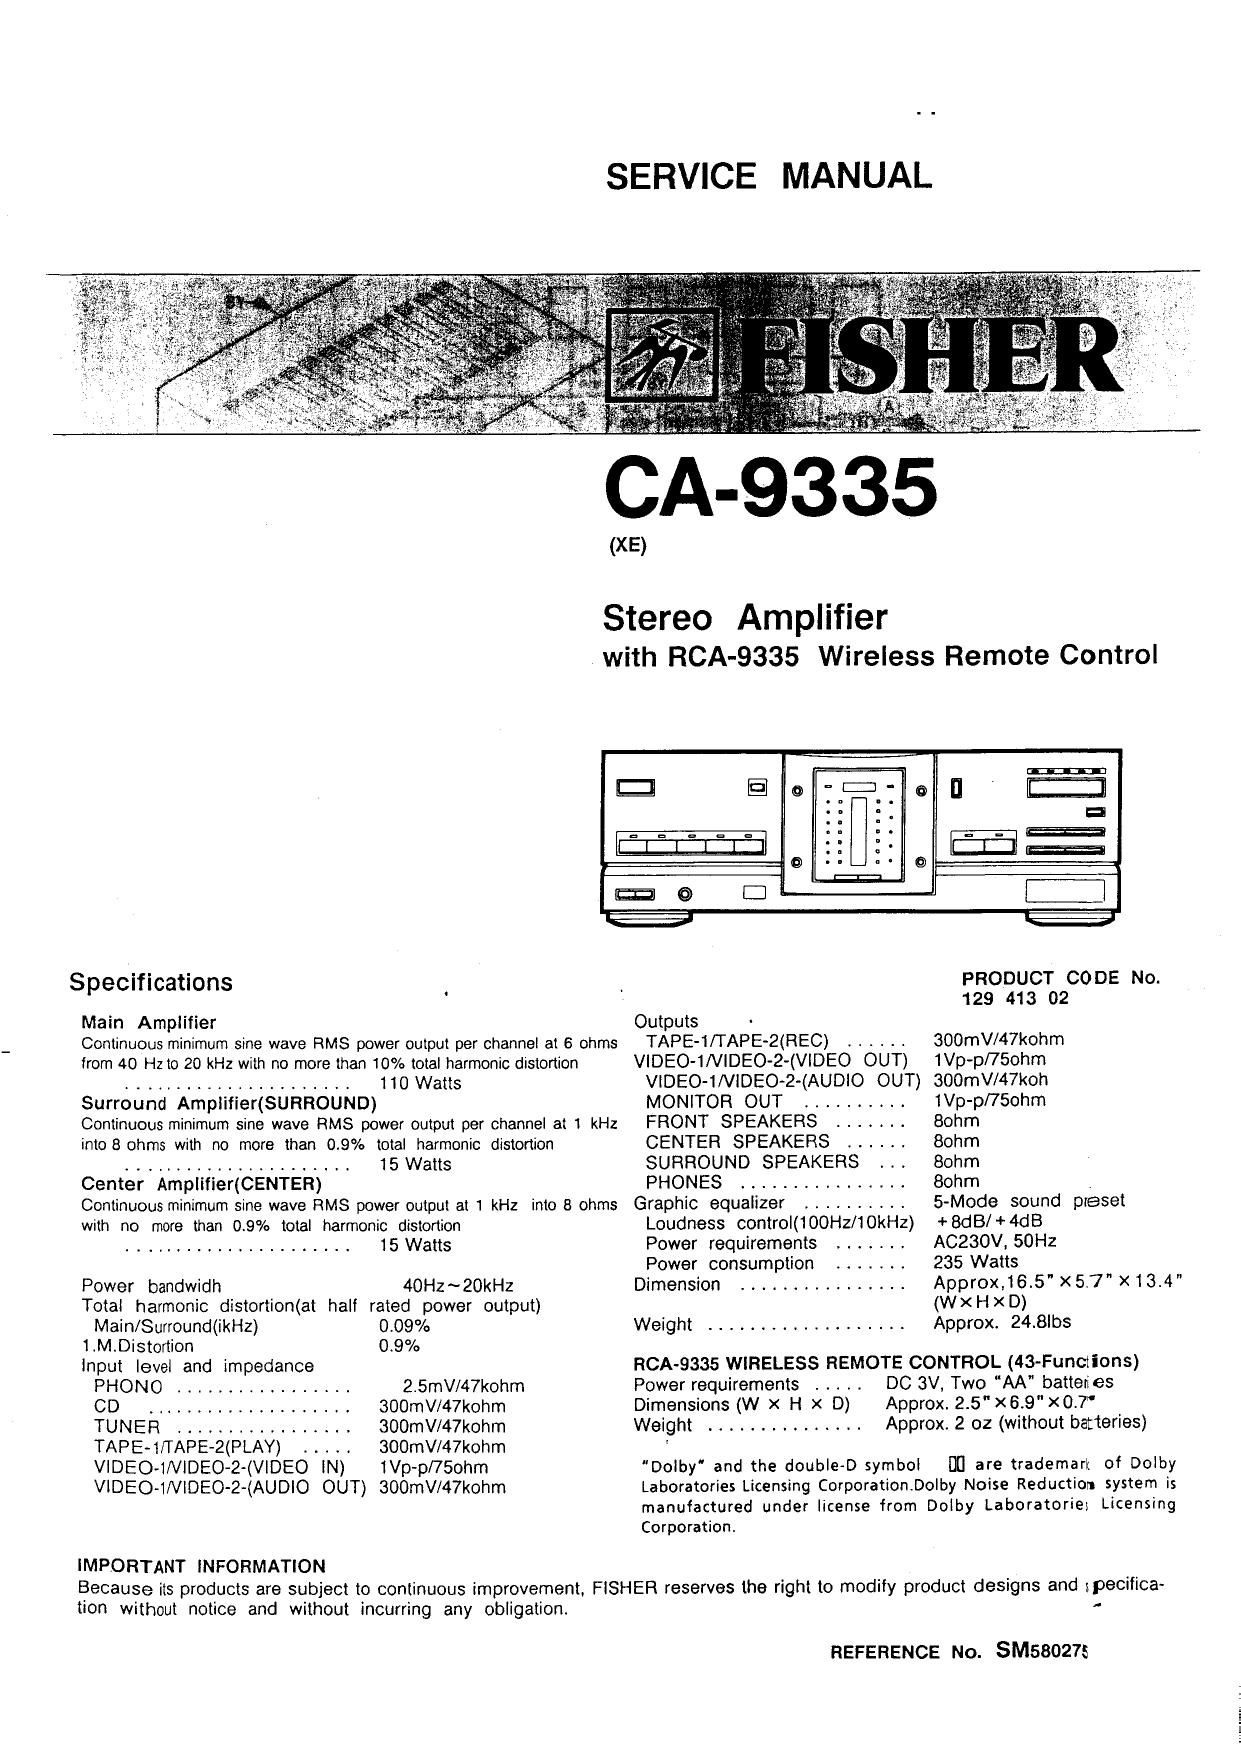 Fisher CA 9335 Service Manual